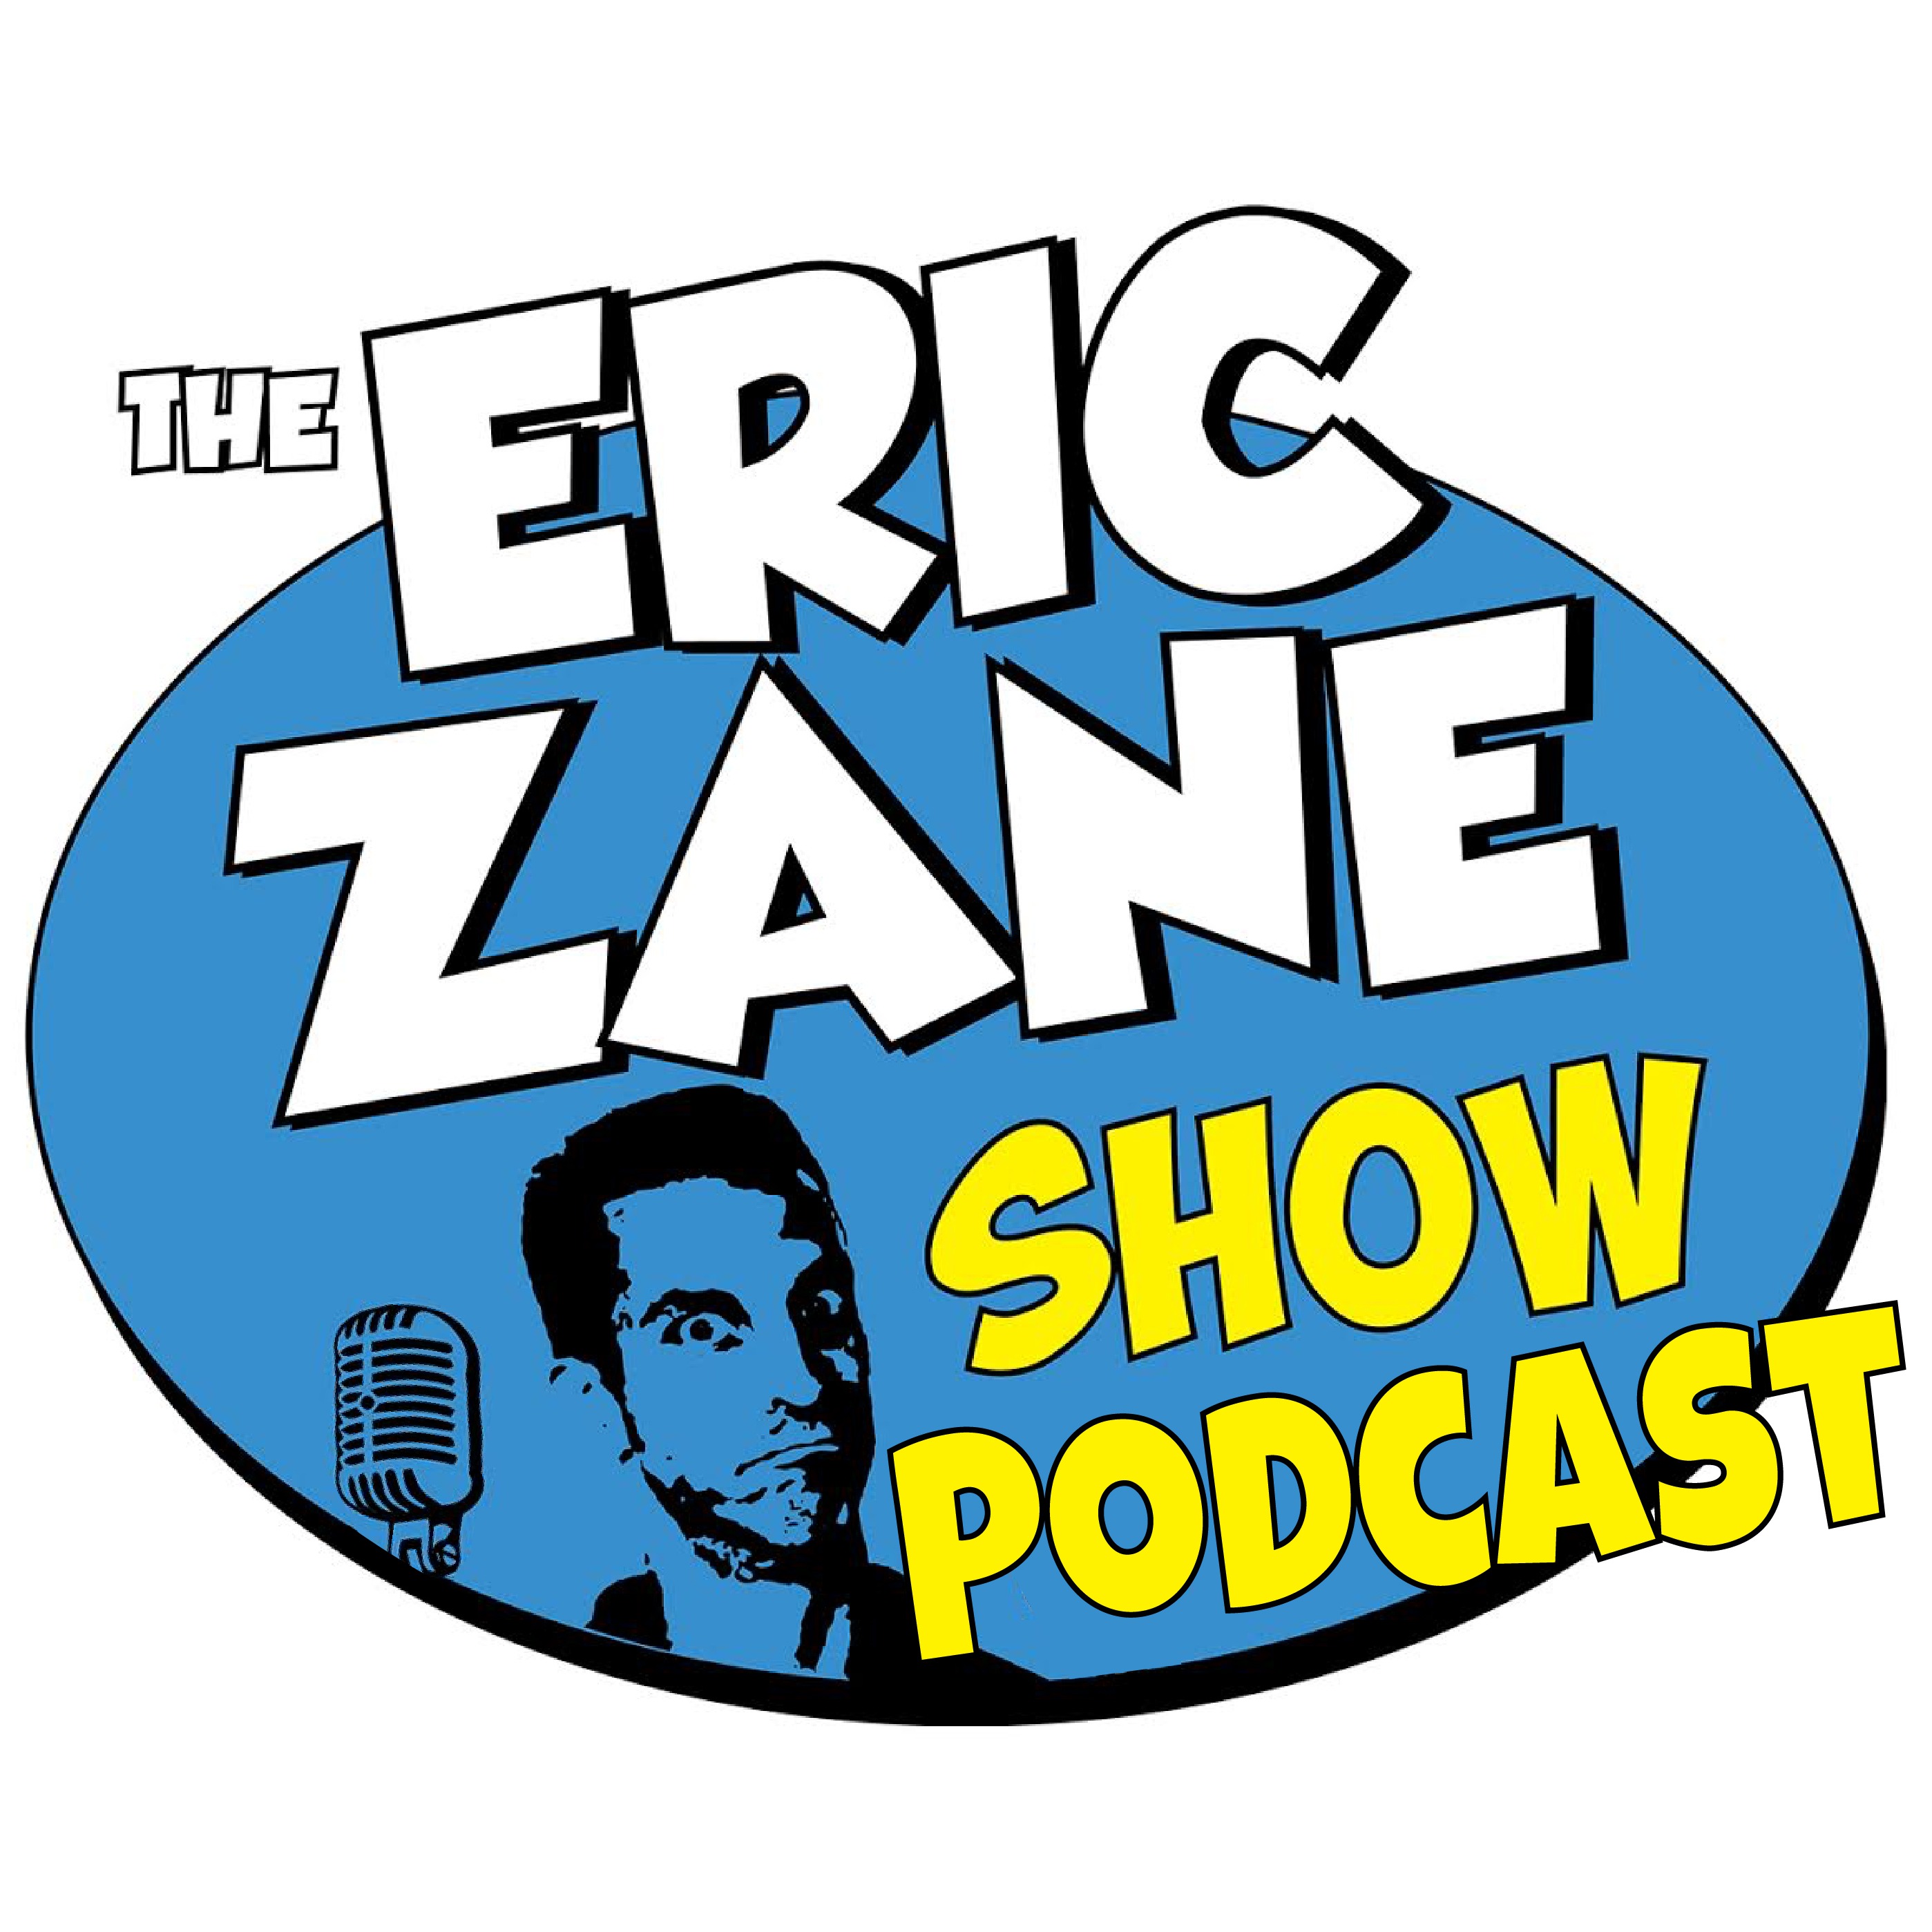 Eric Zane Show Podcast 900 - Milestone:  No regrets